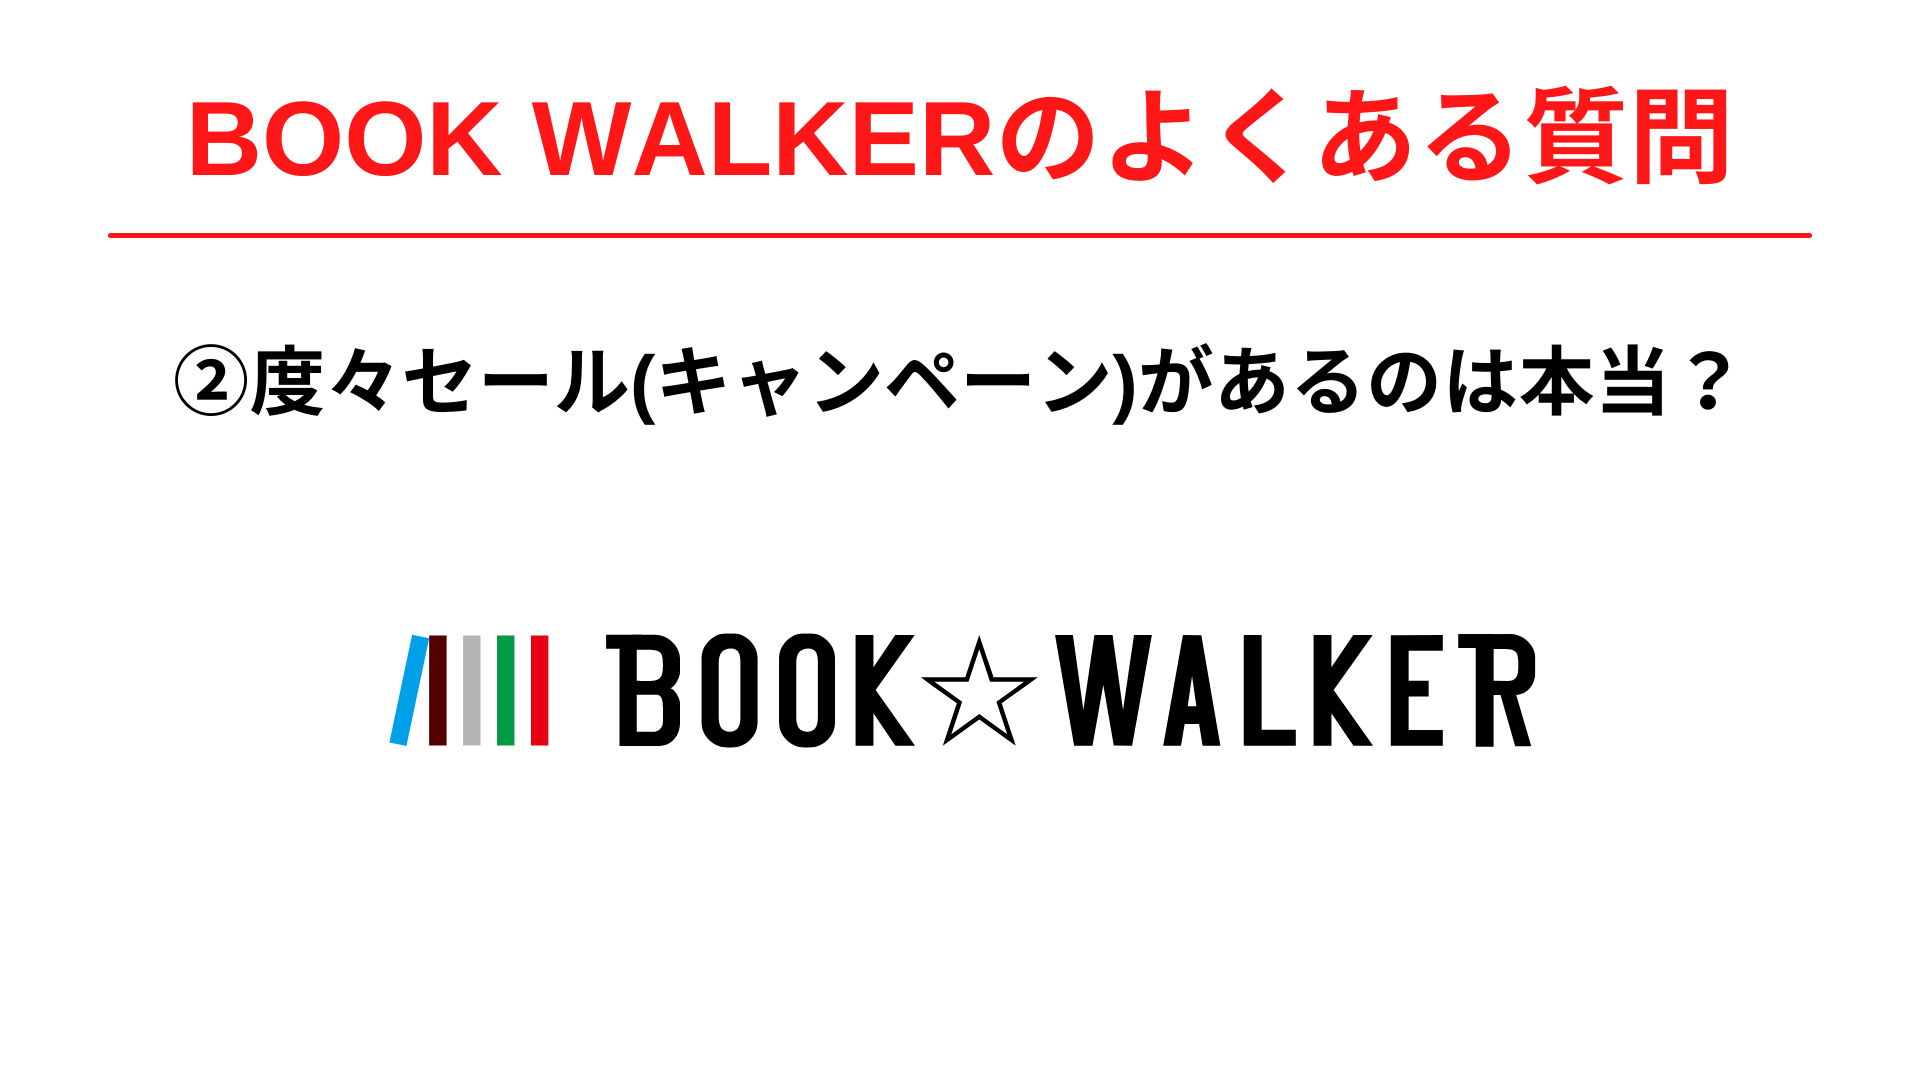 BOOK WALKERで度々セール(キャンペーン)があるというのは本当ですか？